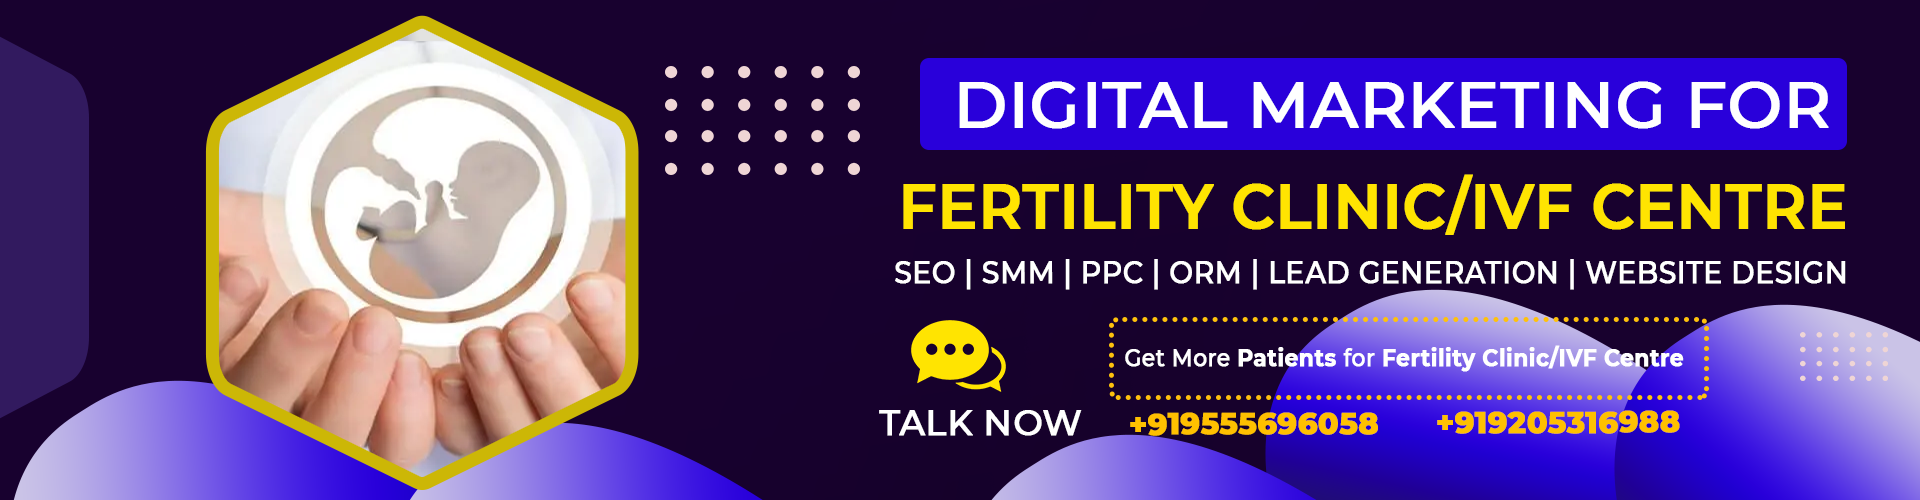 digital-marketing-for-fertility-clinic-ivf-centre